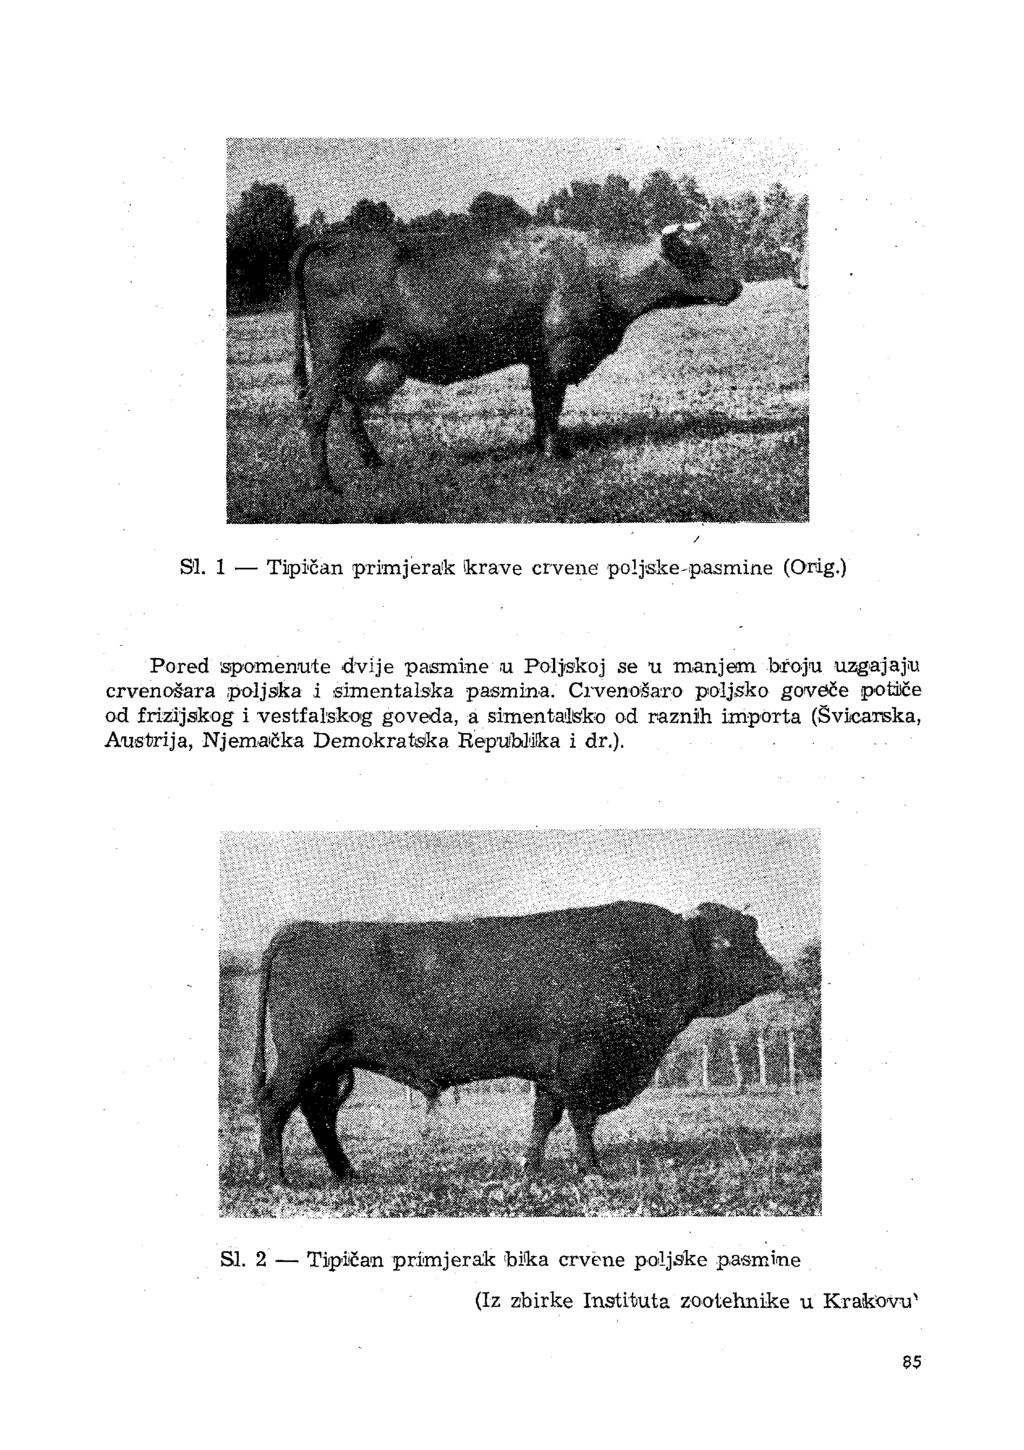 91. 1 Tipičan primjerak krave crvene poljske-pasmine (Orig.